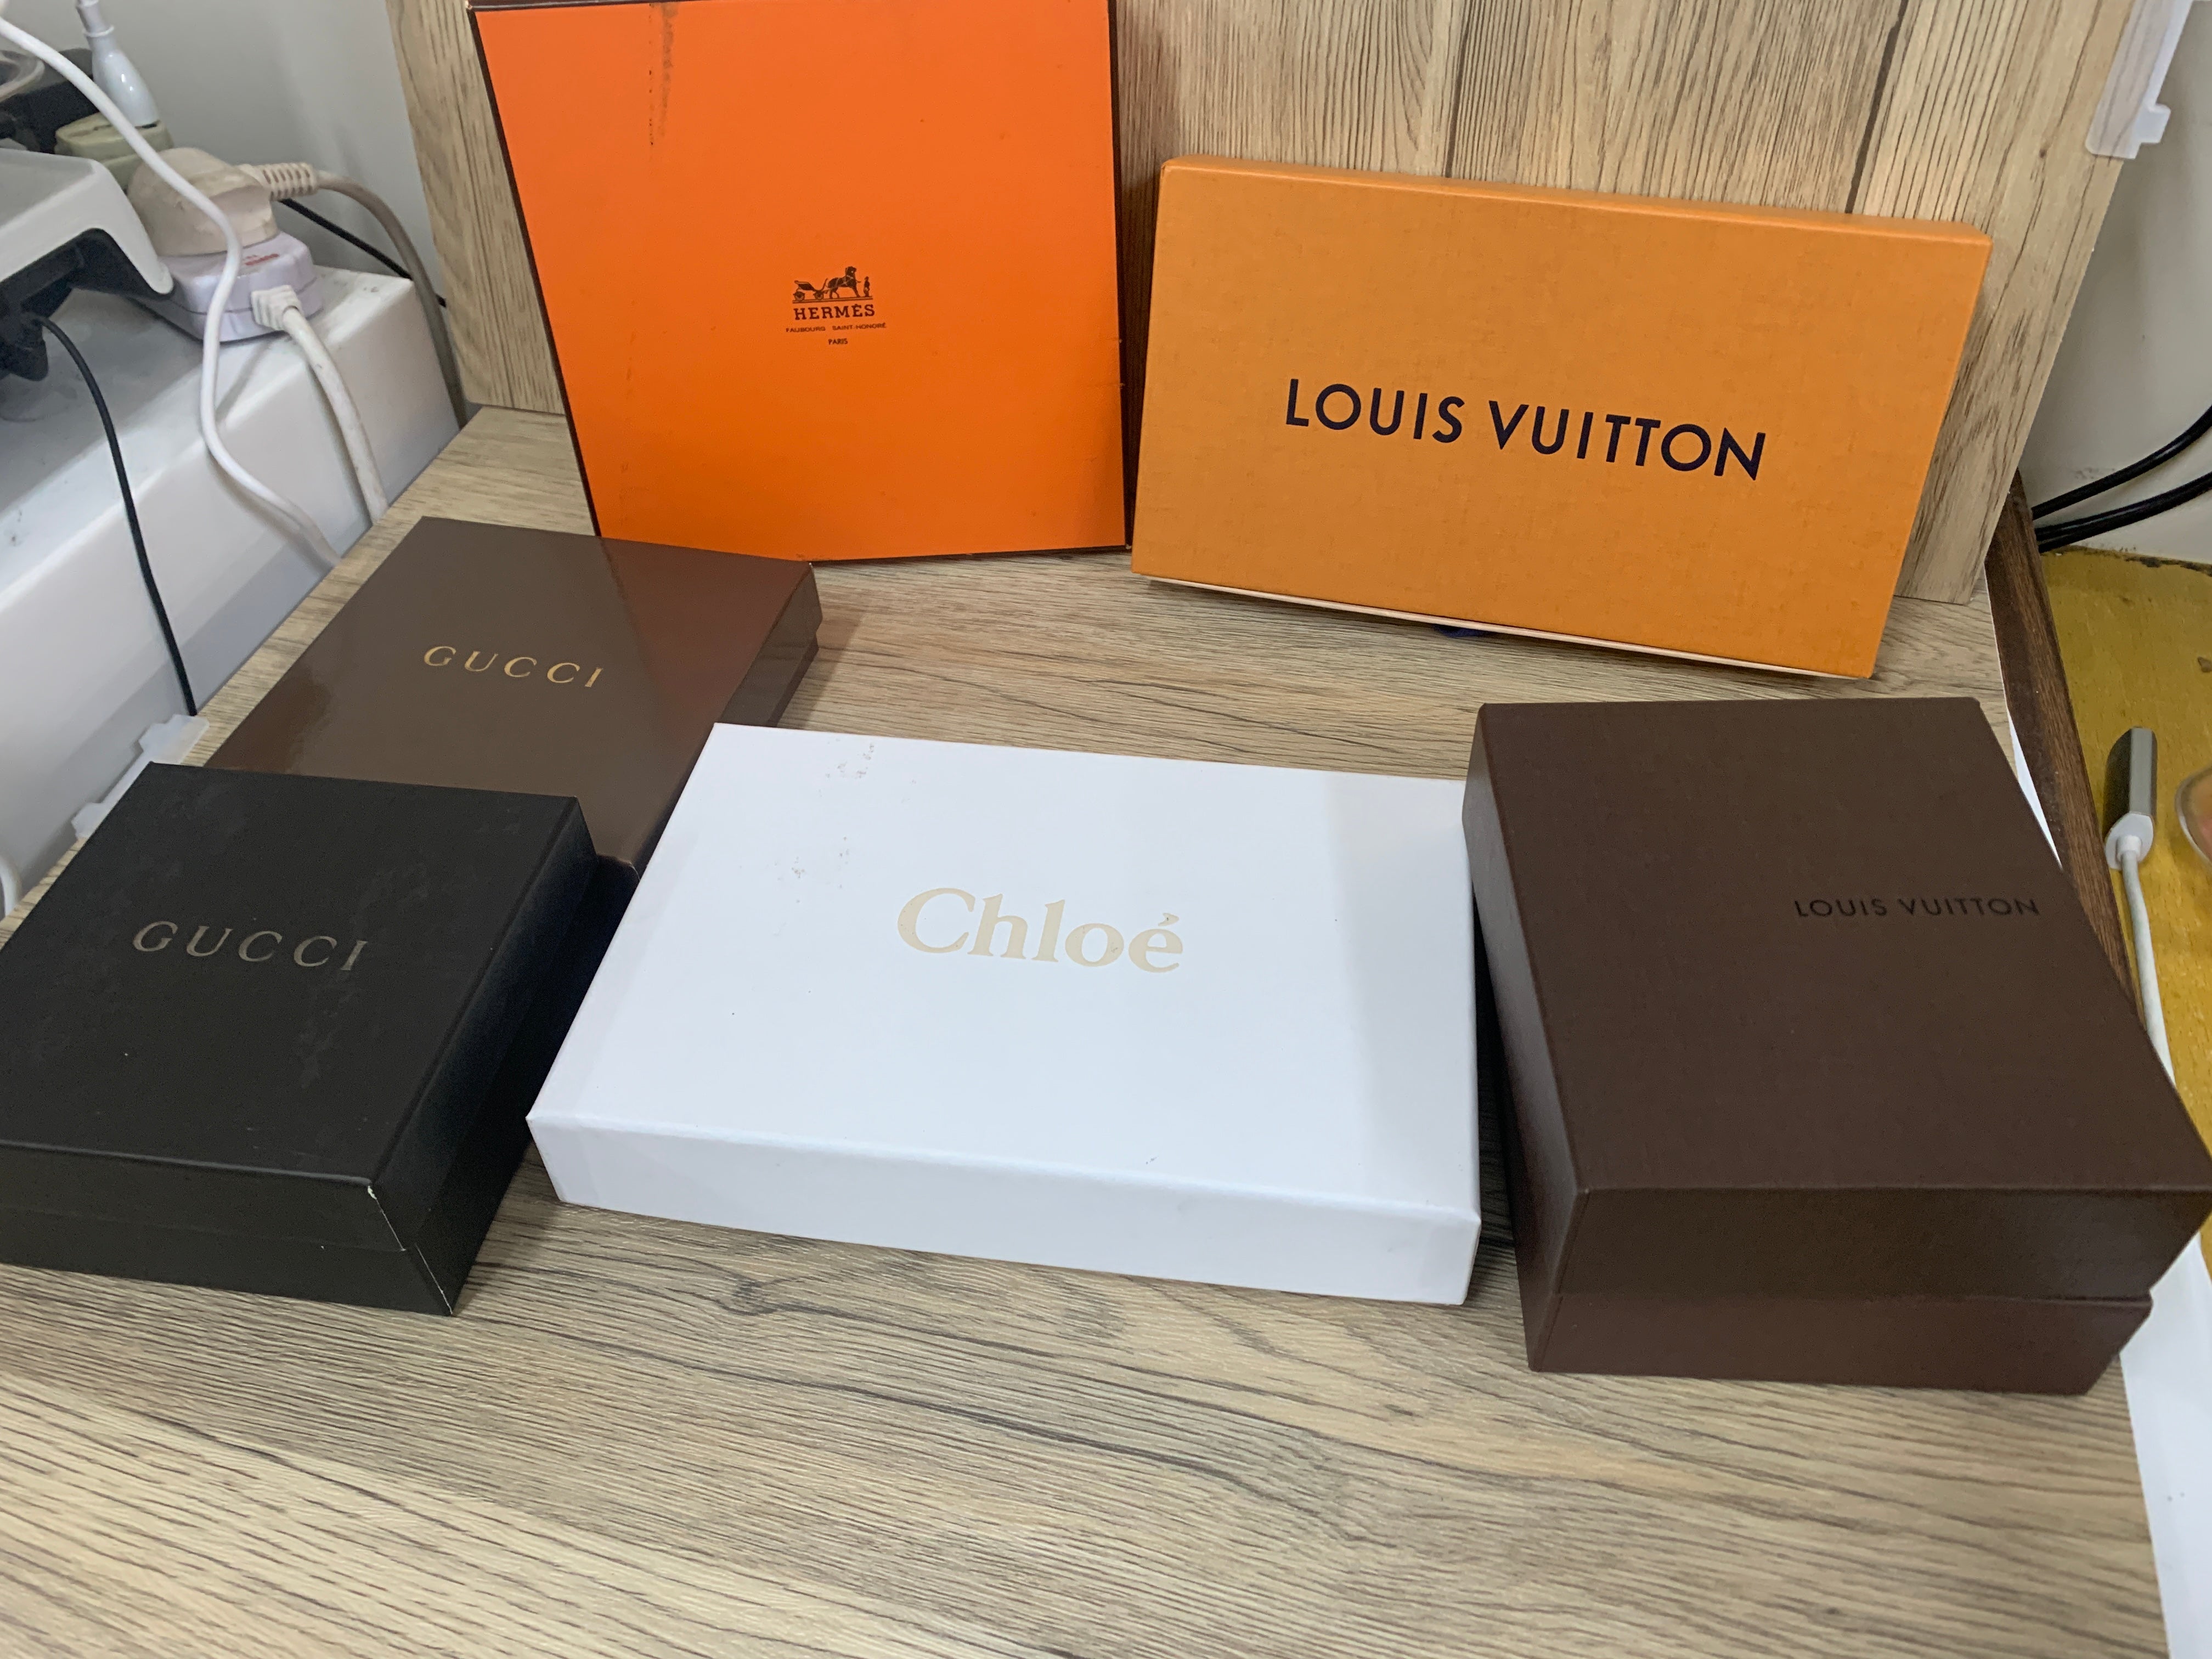 Louis Vuitton Gift Box